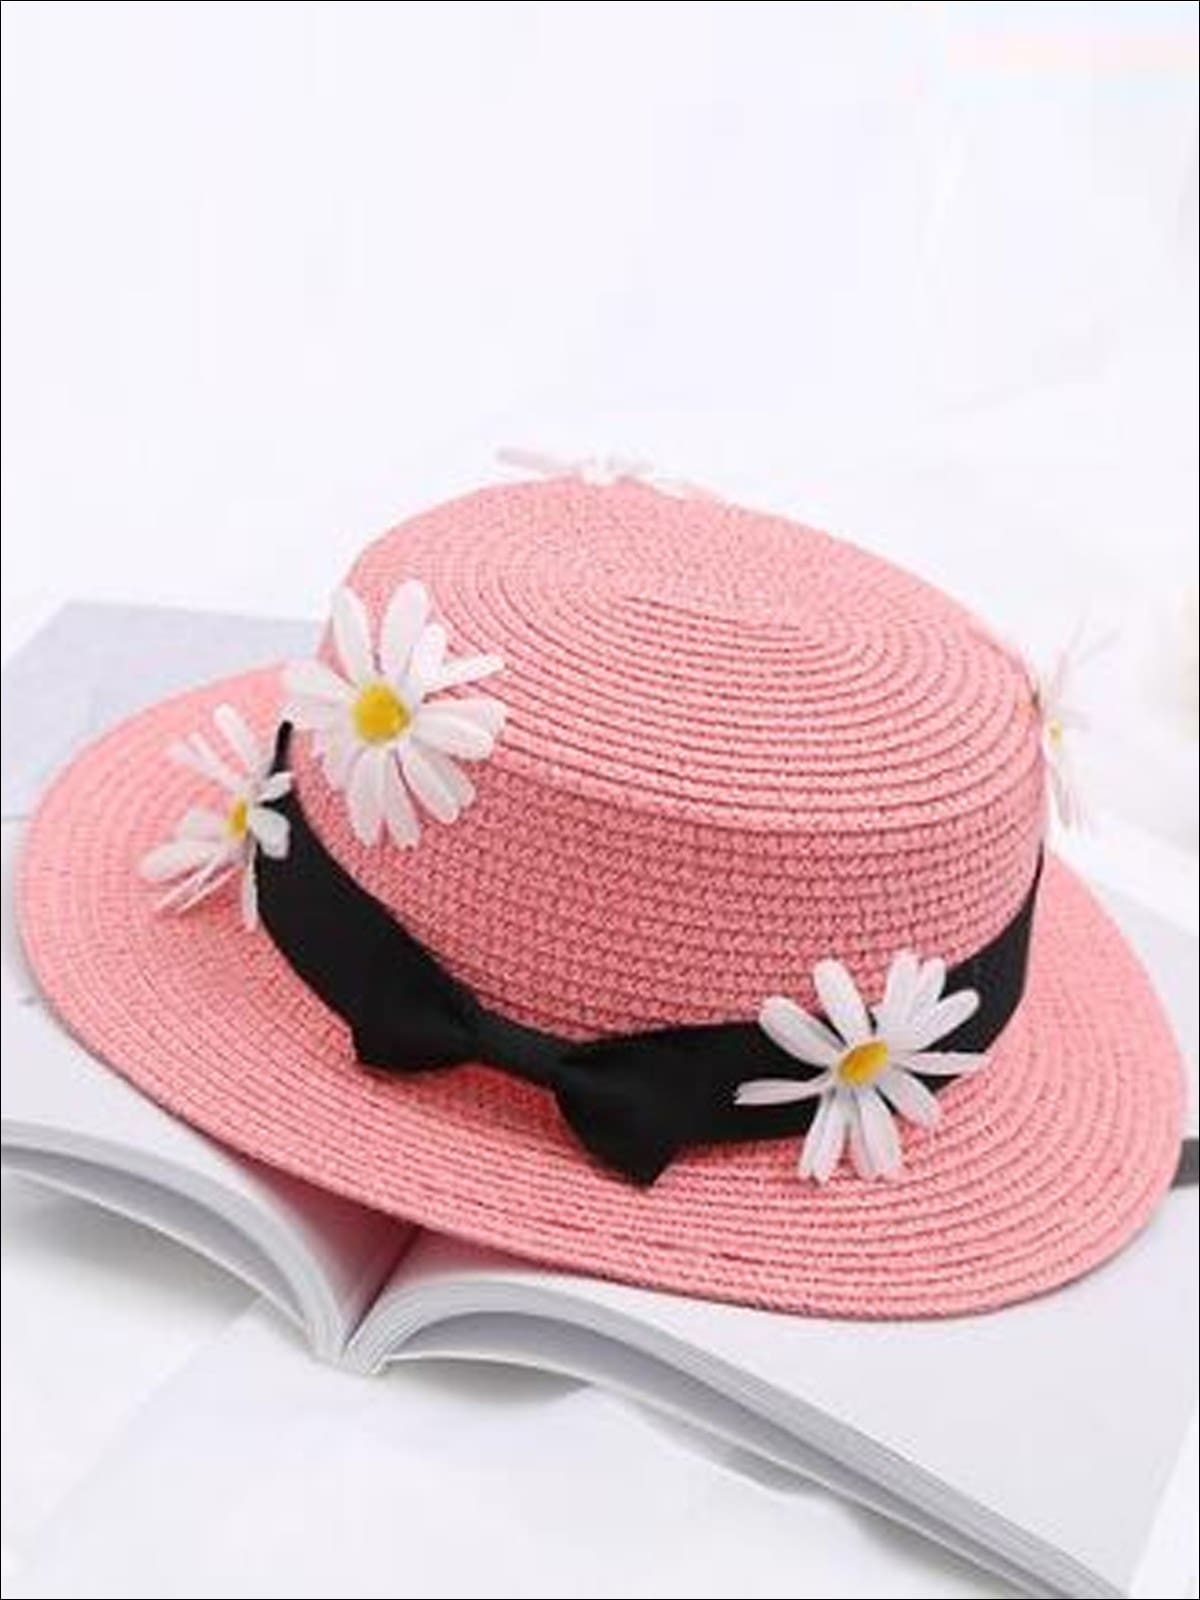 Dahlia Breezy Silver-Tone Thread Large Ribbon Bow Shapeable Floppy Sun Hat Rosy Pink